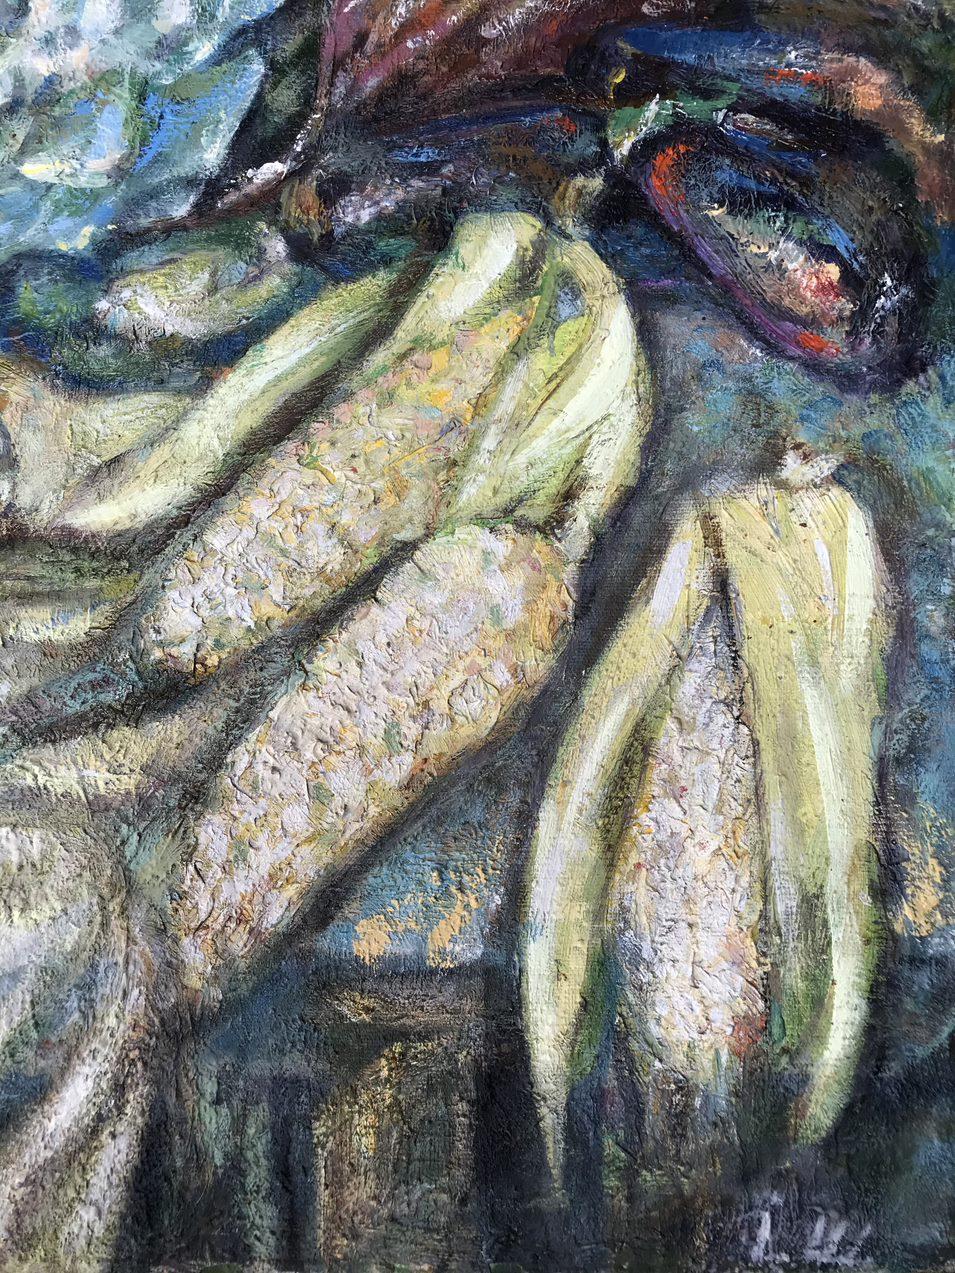 Artist: Shapoval Ivan Leontyevich
Work: Original oil painting, handmade artwork, one of a kind 
Medium: Oil on Canvas
Style: Impressionism
Year: 1983
Title: Harvest, Still Life
Size: 42